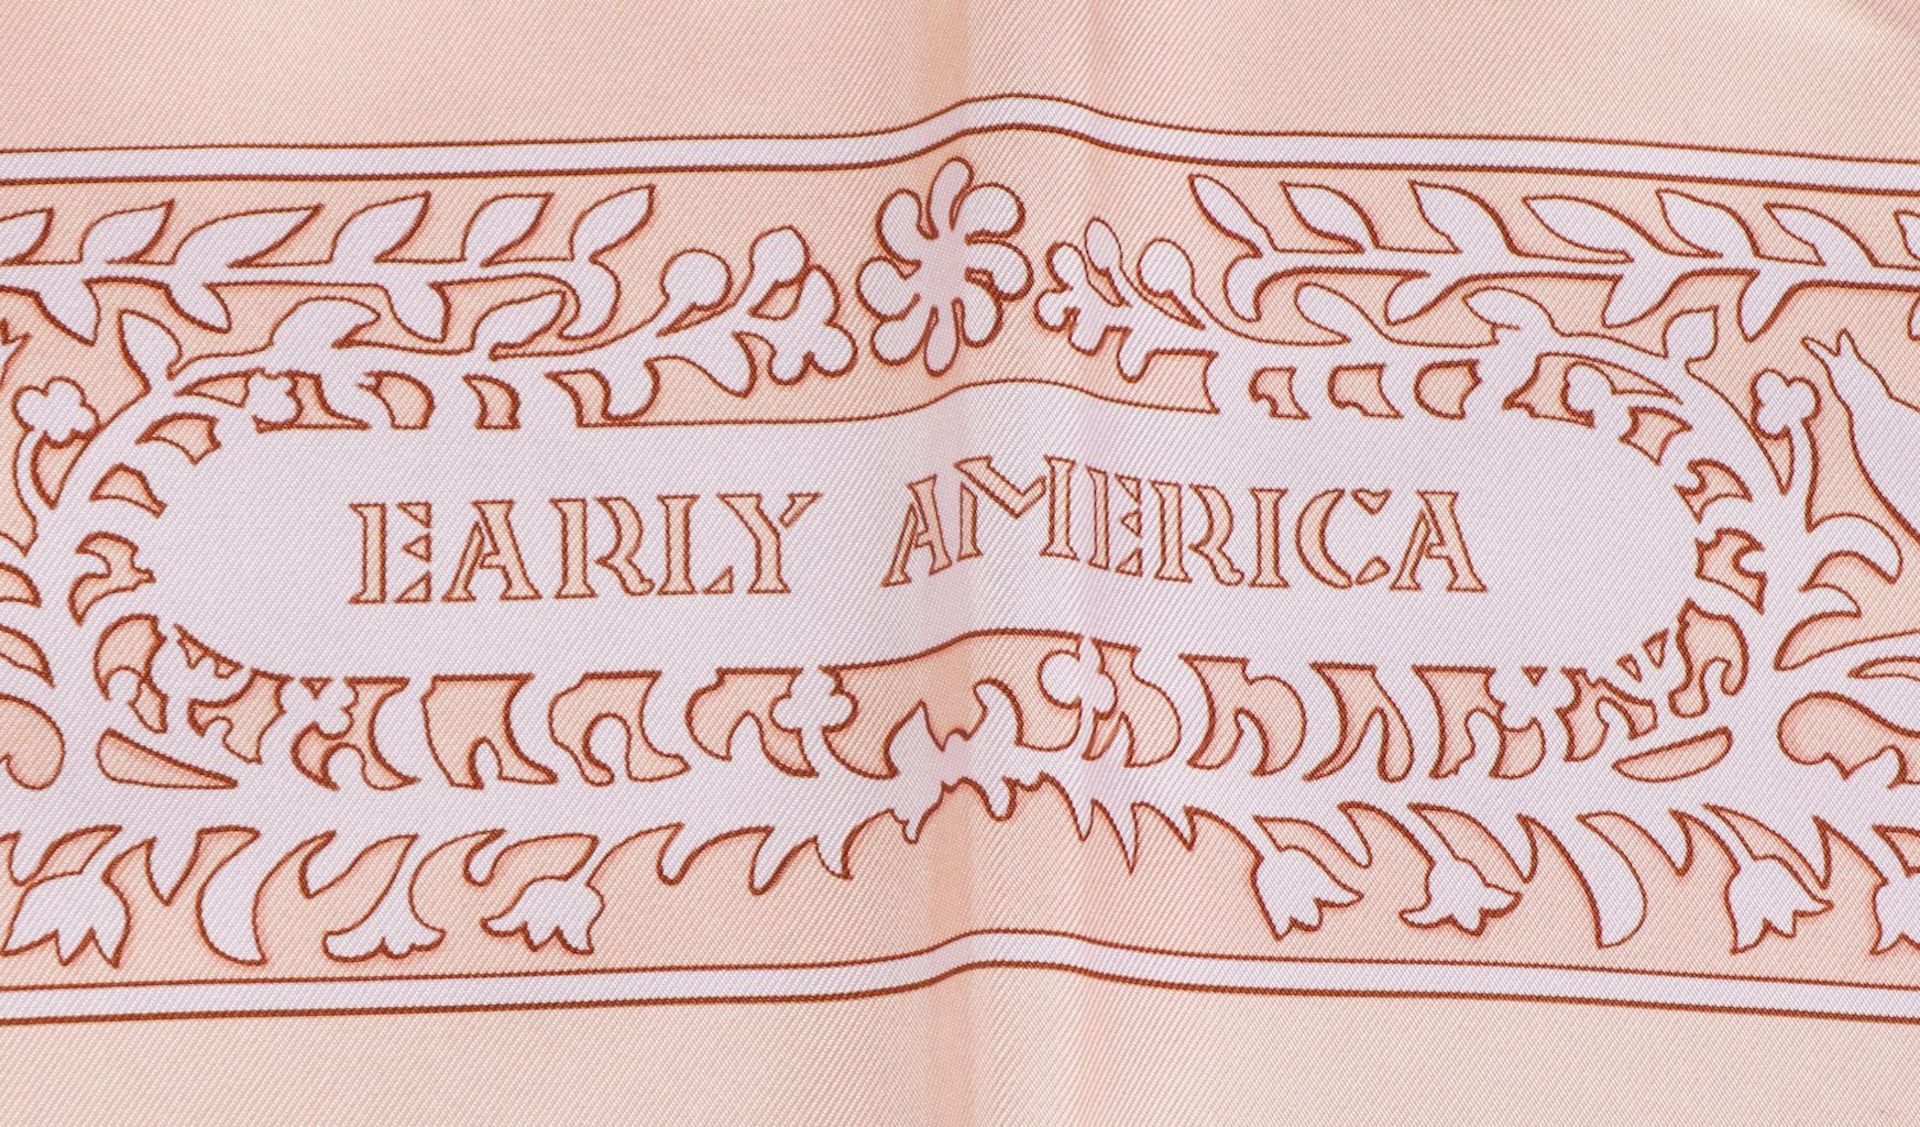 HERMES Seidentuch ¨Early America¨ by F. DE LA PERRIERE - Image 3 of 6